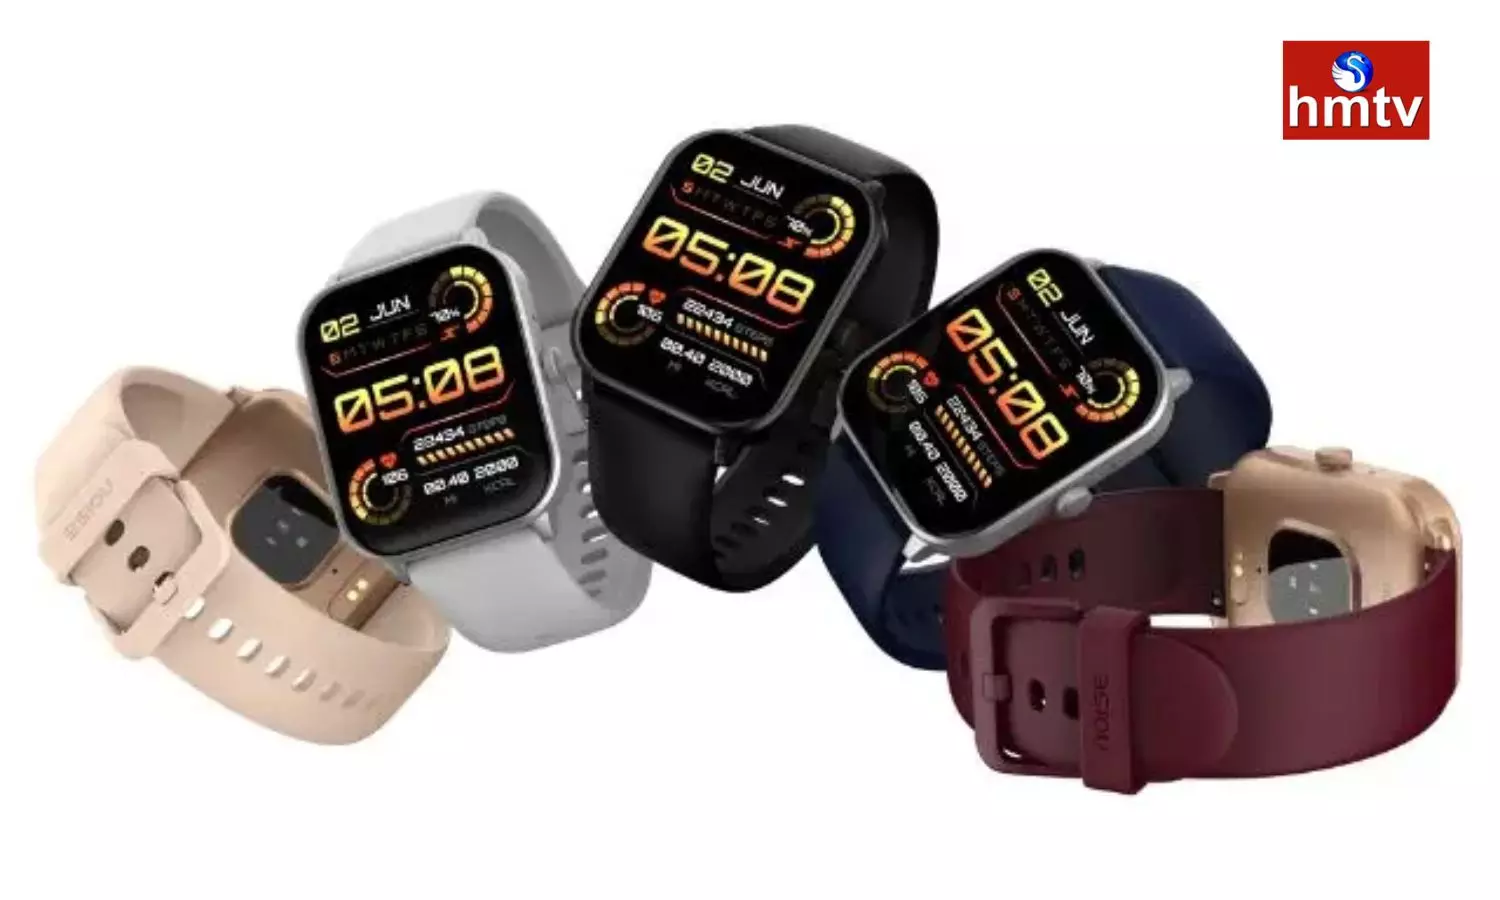 Noise Colorfit Qube 2 Smartwatch Launched Check for all Details